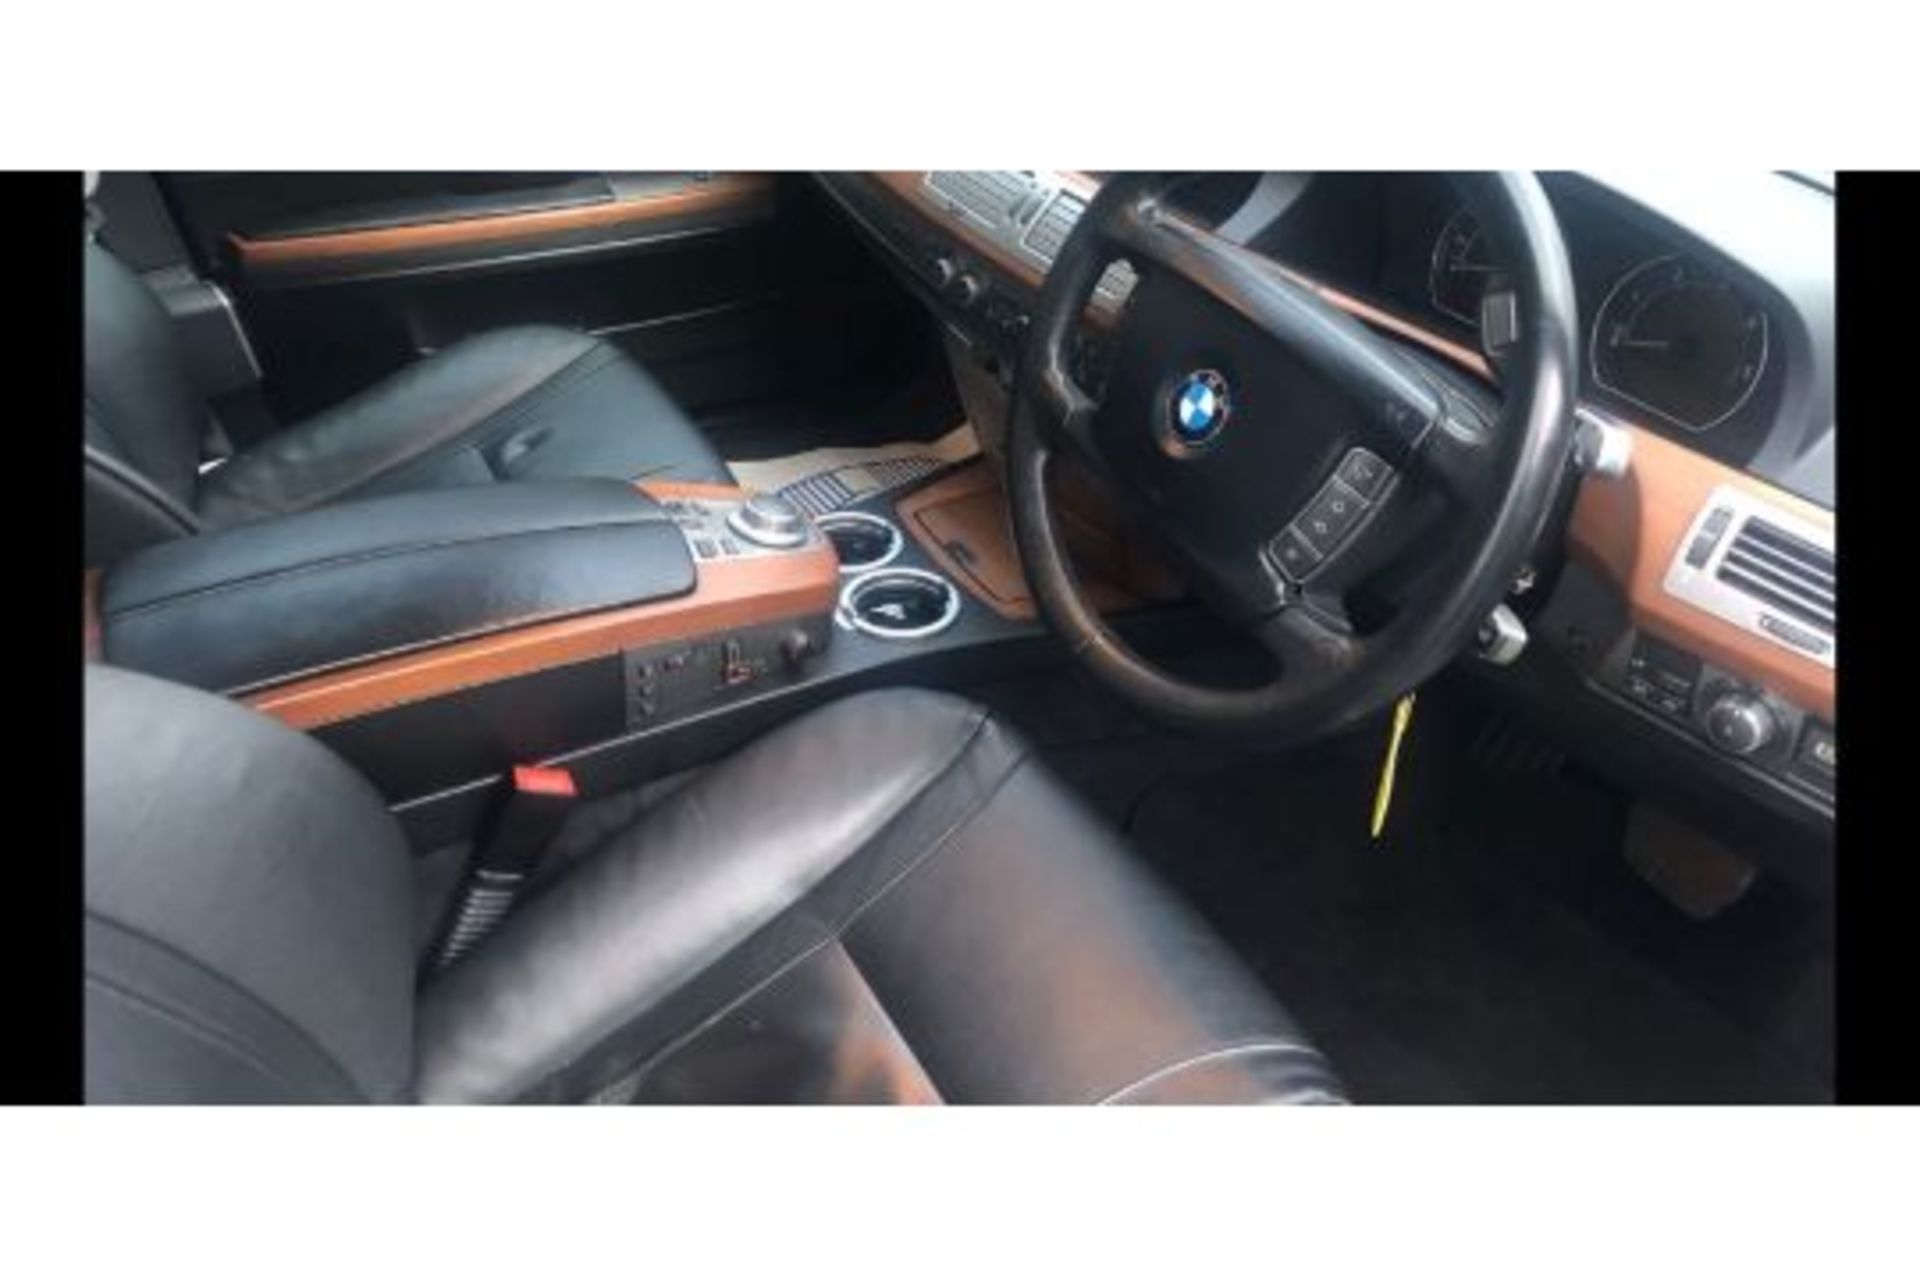 2007 BMW 730D, 136k miles, Just been serviced *NO VAT* - Image 9 of 11